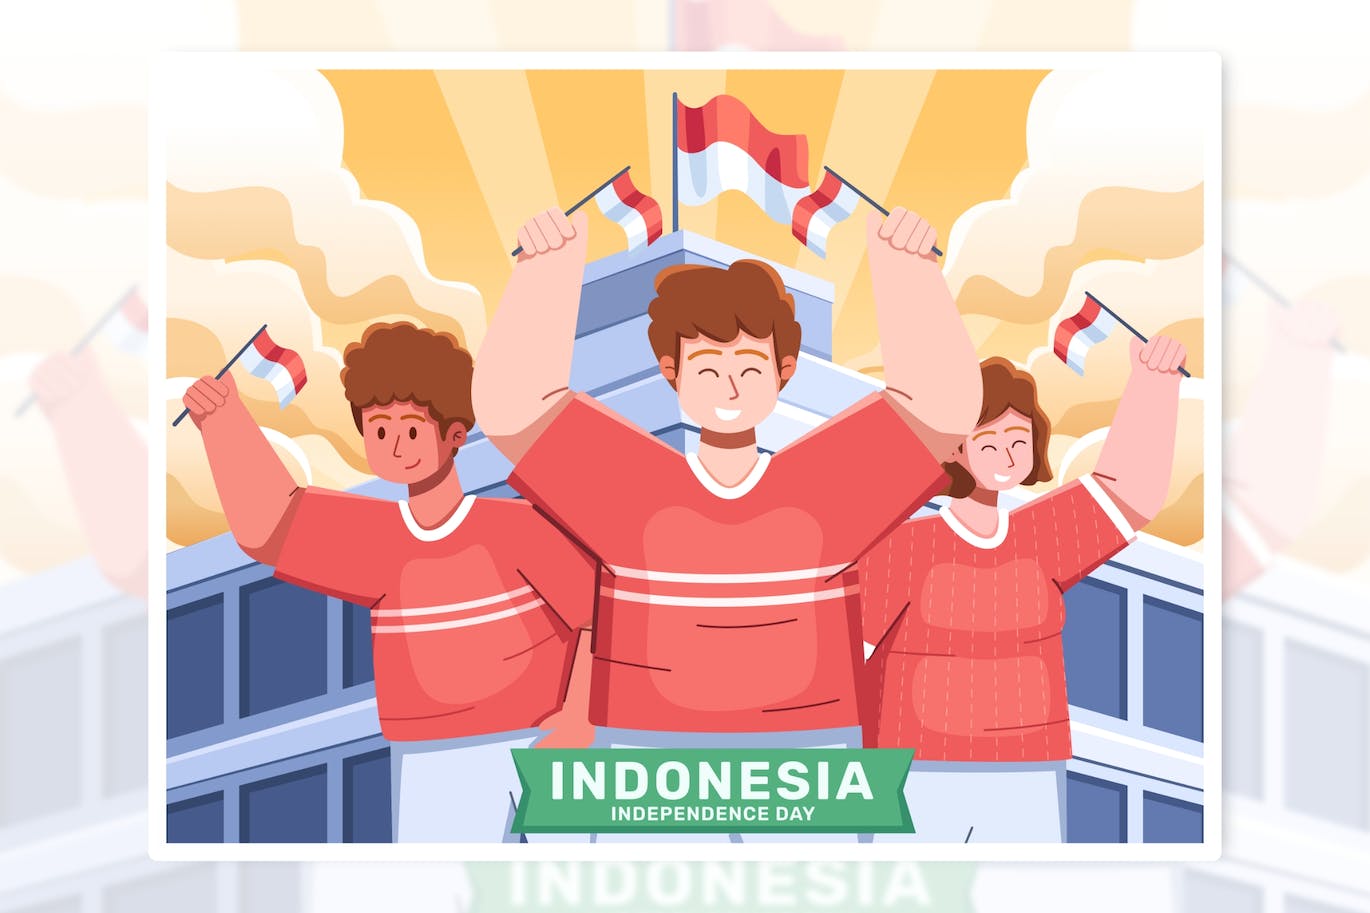 印度尼西亚独立日庆祝活动矢量插画 Indonesia Independence Day Celebration With Happy-1